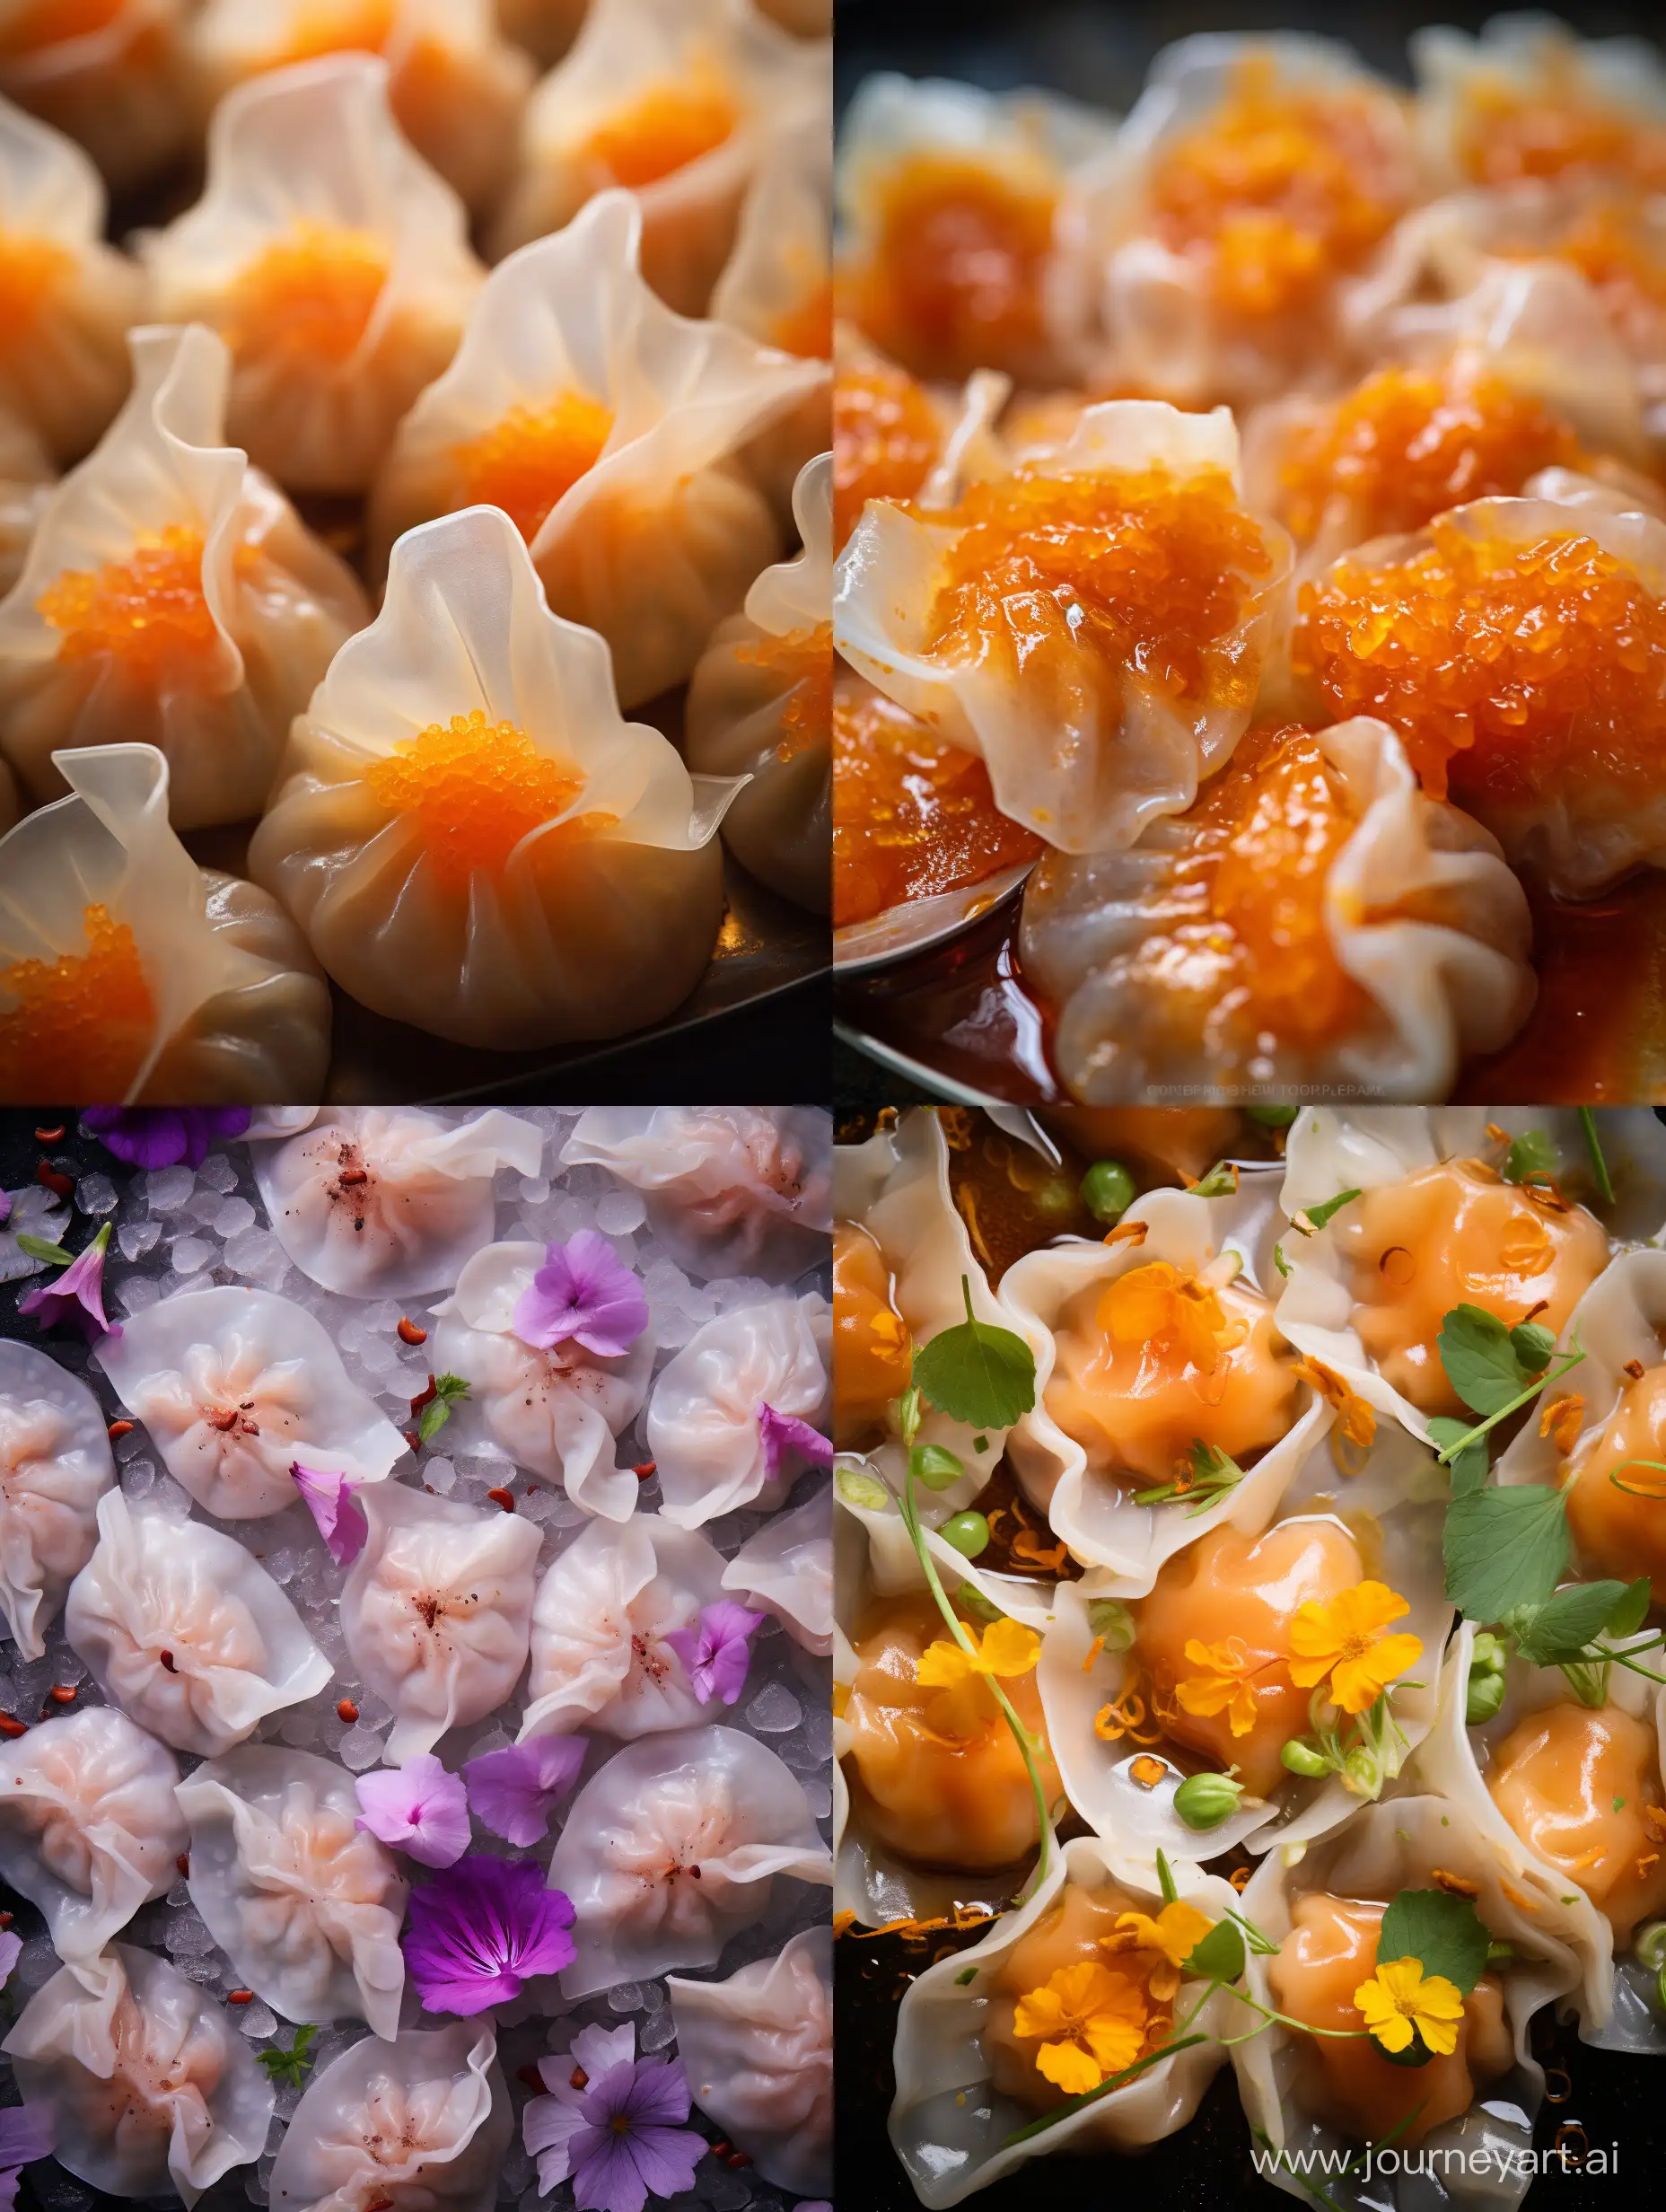 Exquisite-Crystal-Shrimp-Dumplings-Closeup-Photography